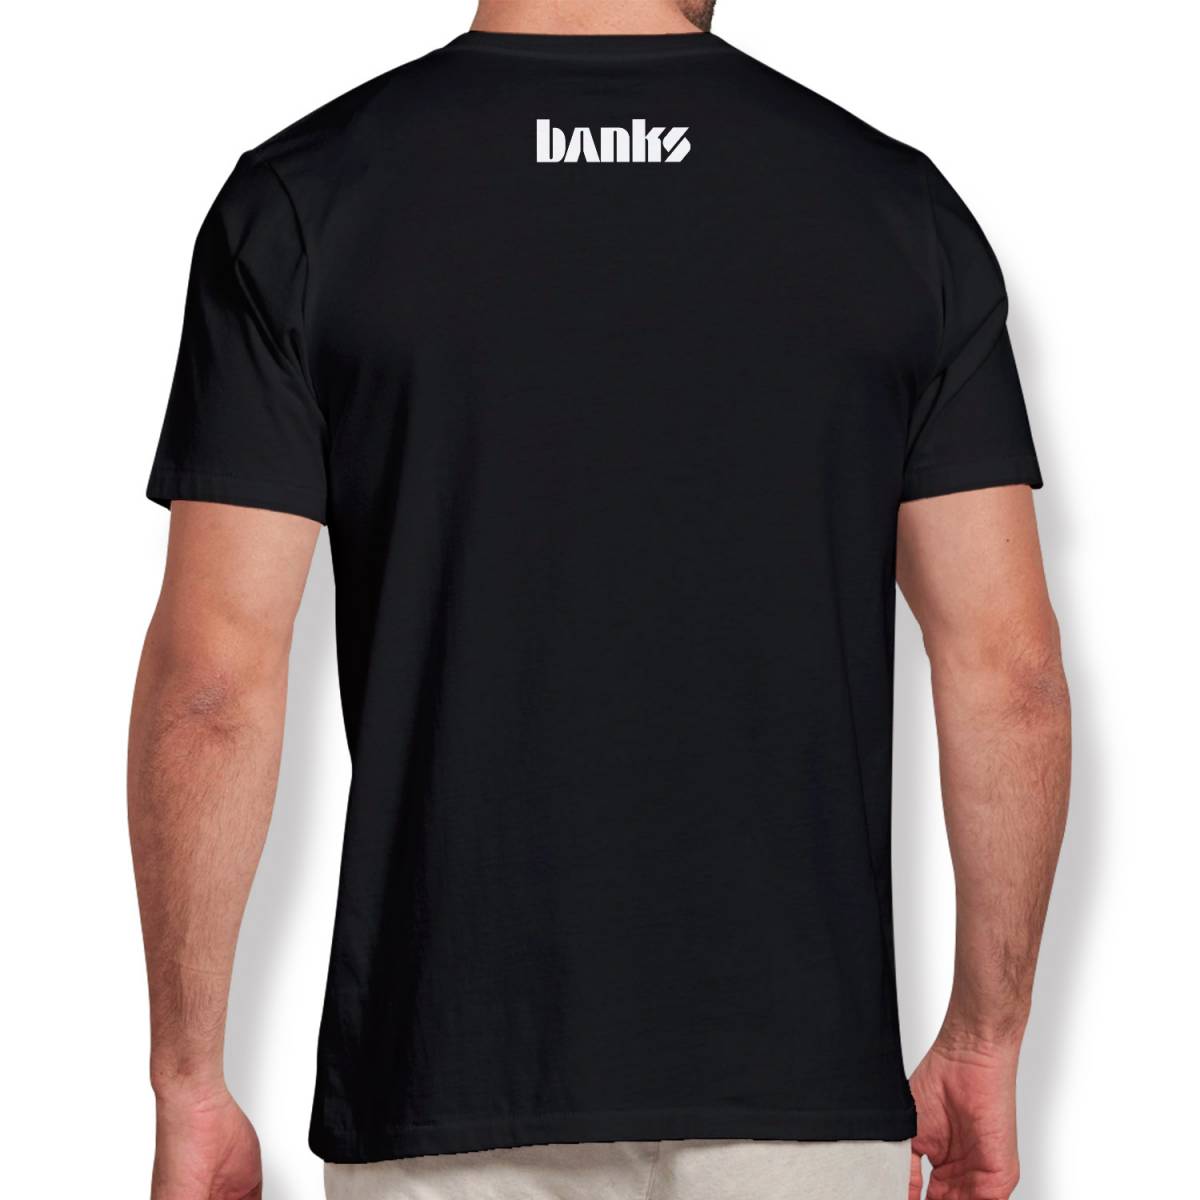 Banks Jeep Face Shirt Rear Logo 96289